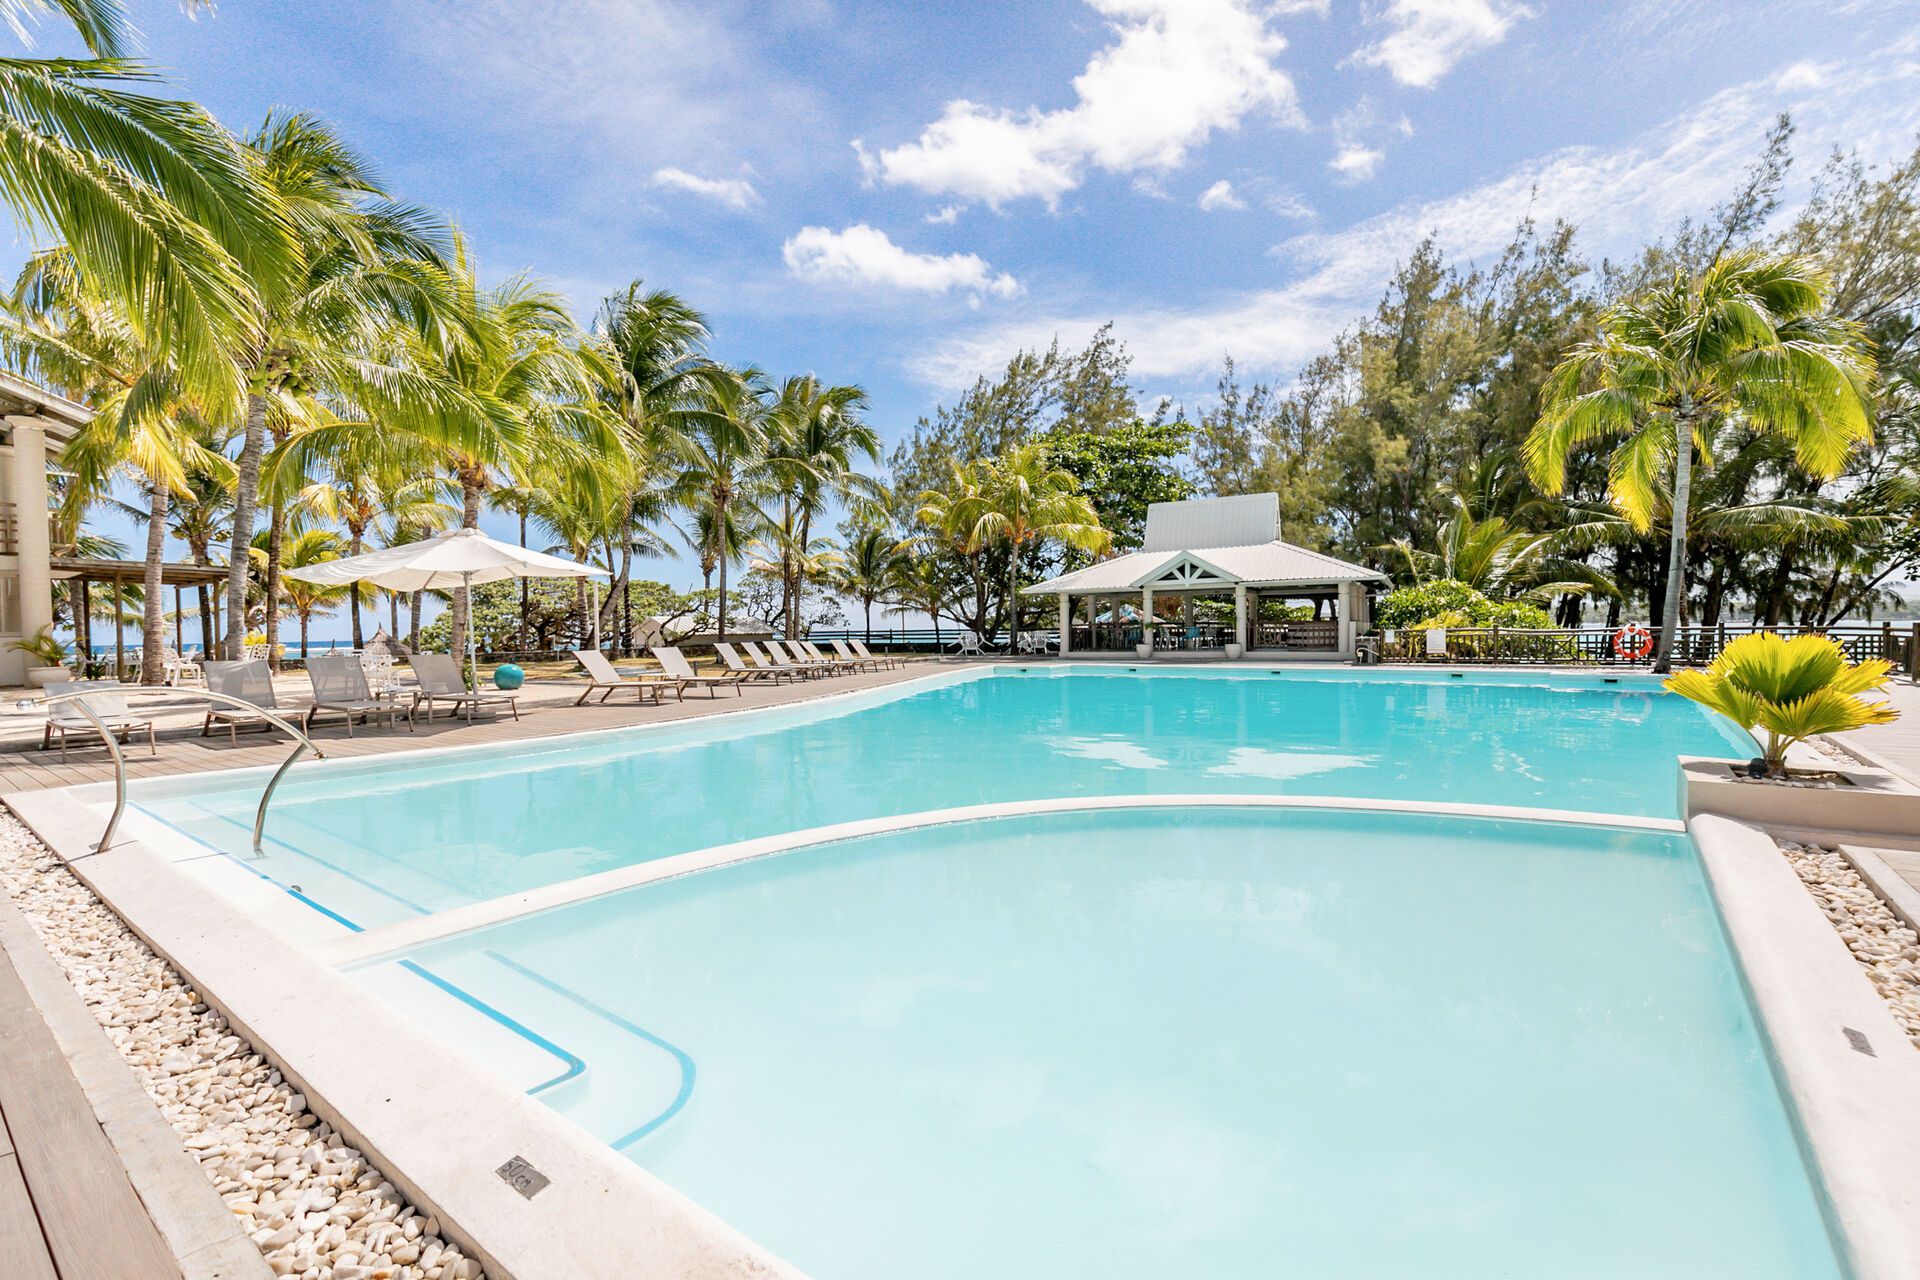 Maurice - Ile Maurice - Hôtel Le Peninsula Bay Beach Resort & Spa 3* - transfert privé inclus